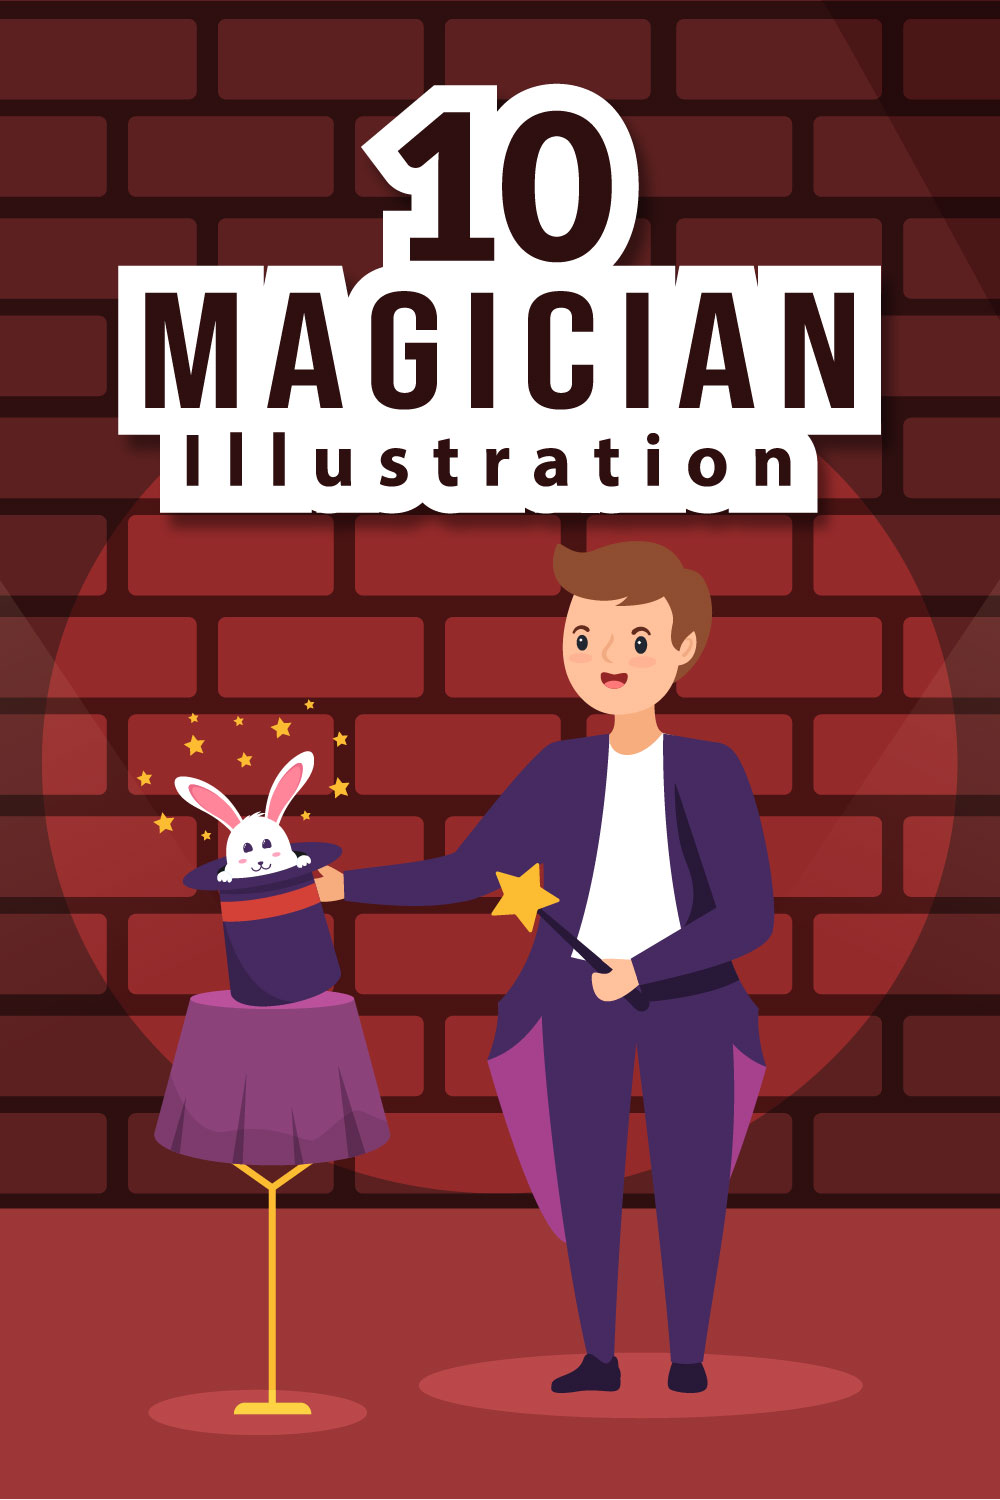 Magician Illusionist Illustration Pinterest image.